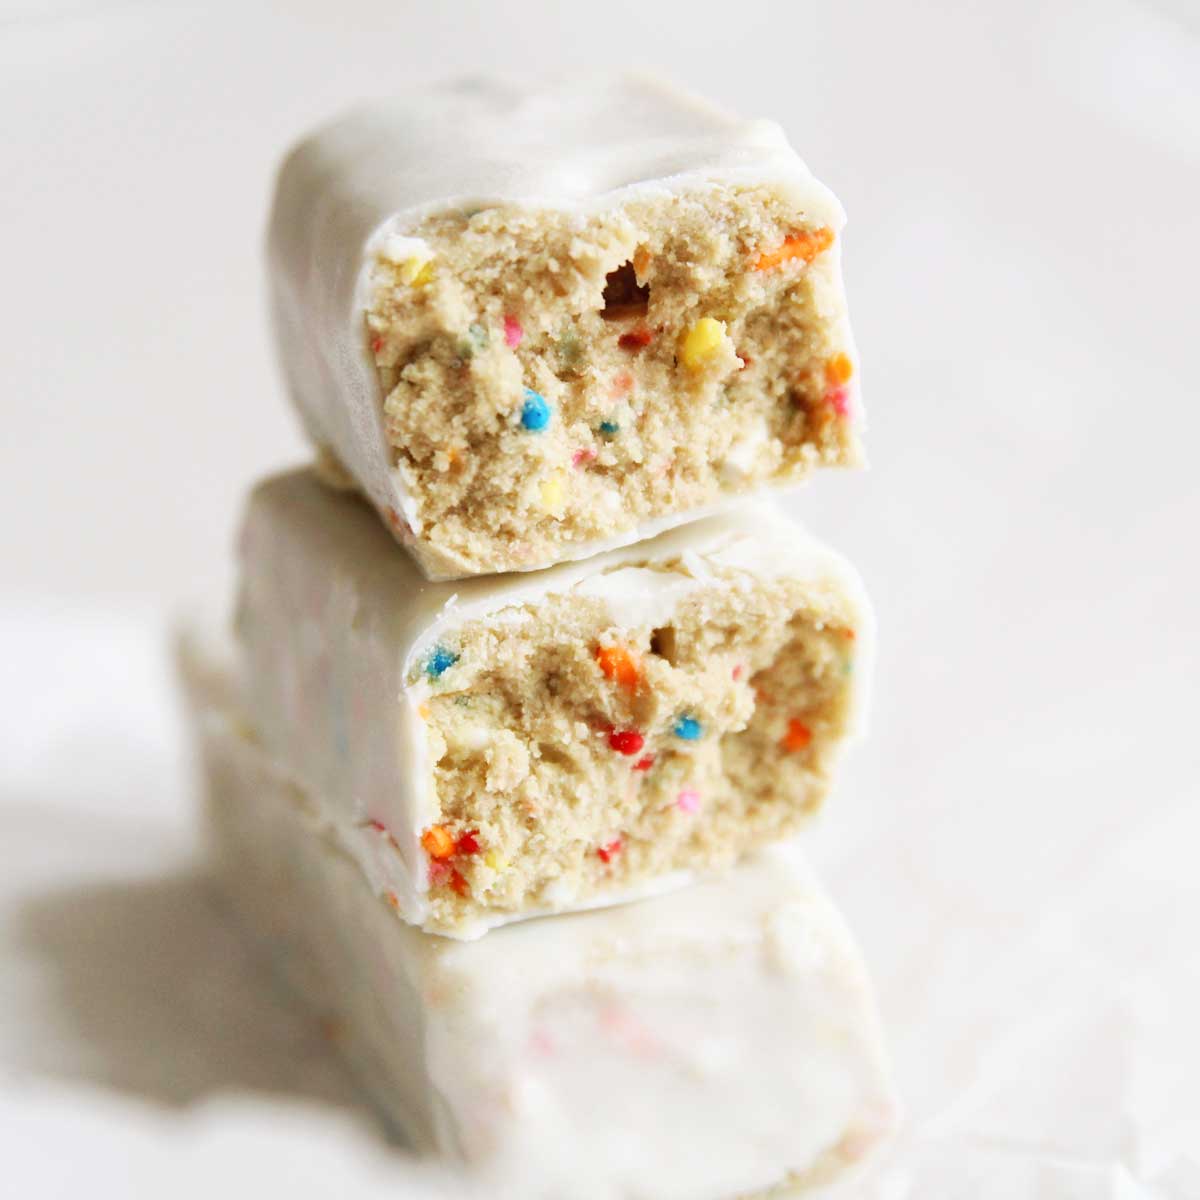 Applesauce Birthday Cake Protein Bars Recipe (Nut-Free, Plant-Based) - Almond Joy Protein Bars